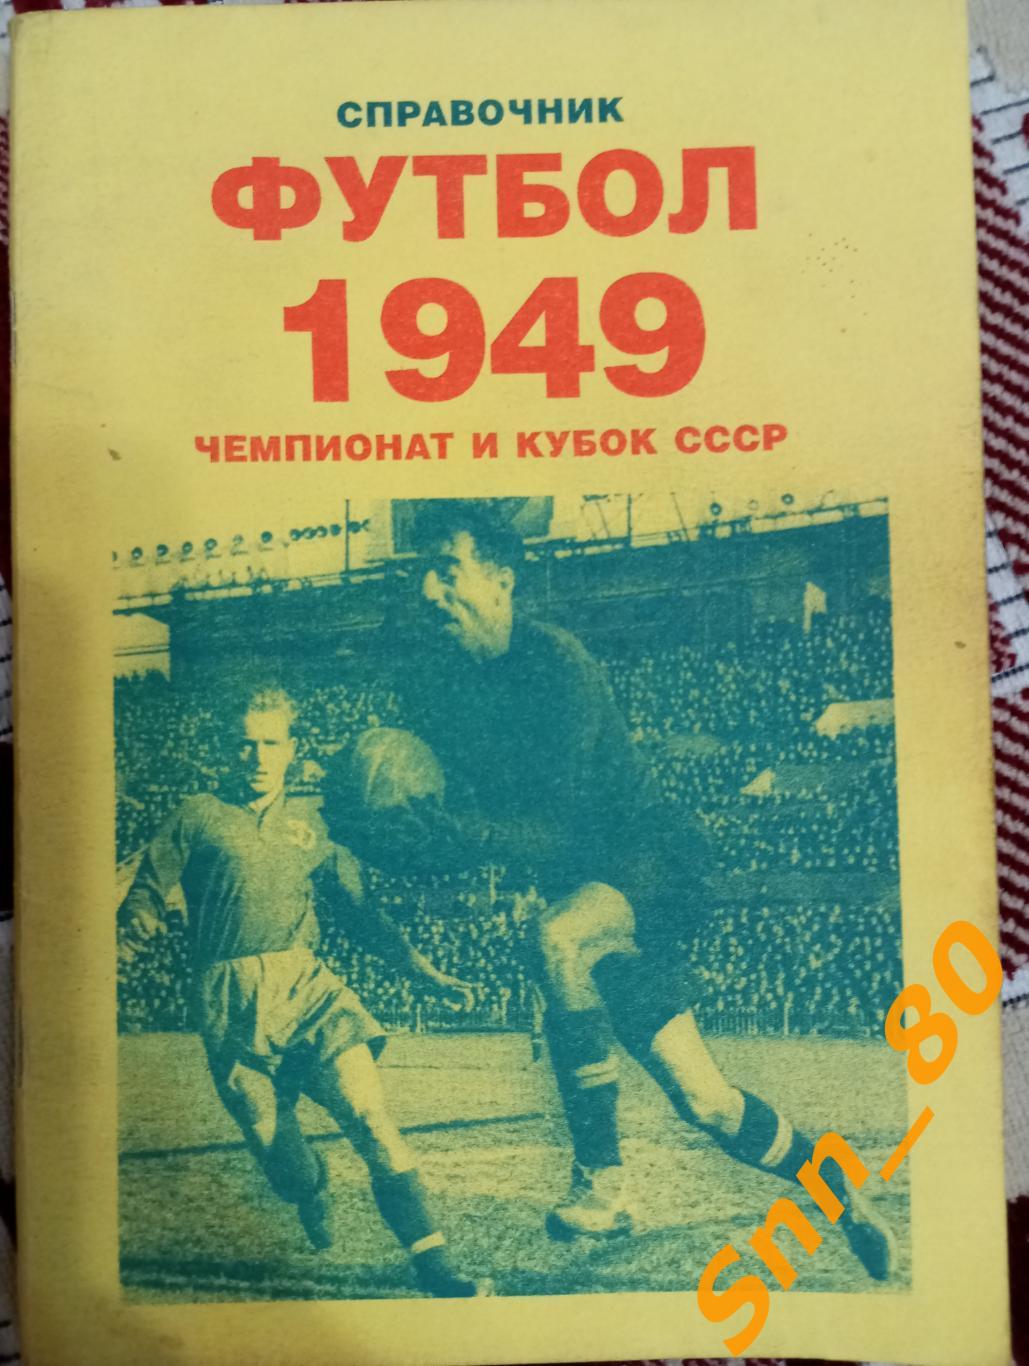 Футбол Календарь-справочник 1949 Чемпионат и Кубок СССР Самара-2005